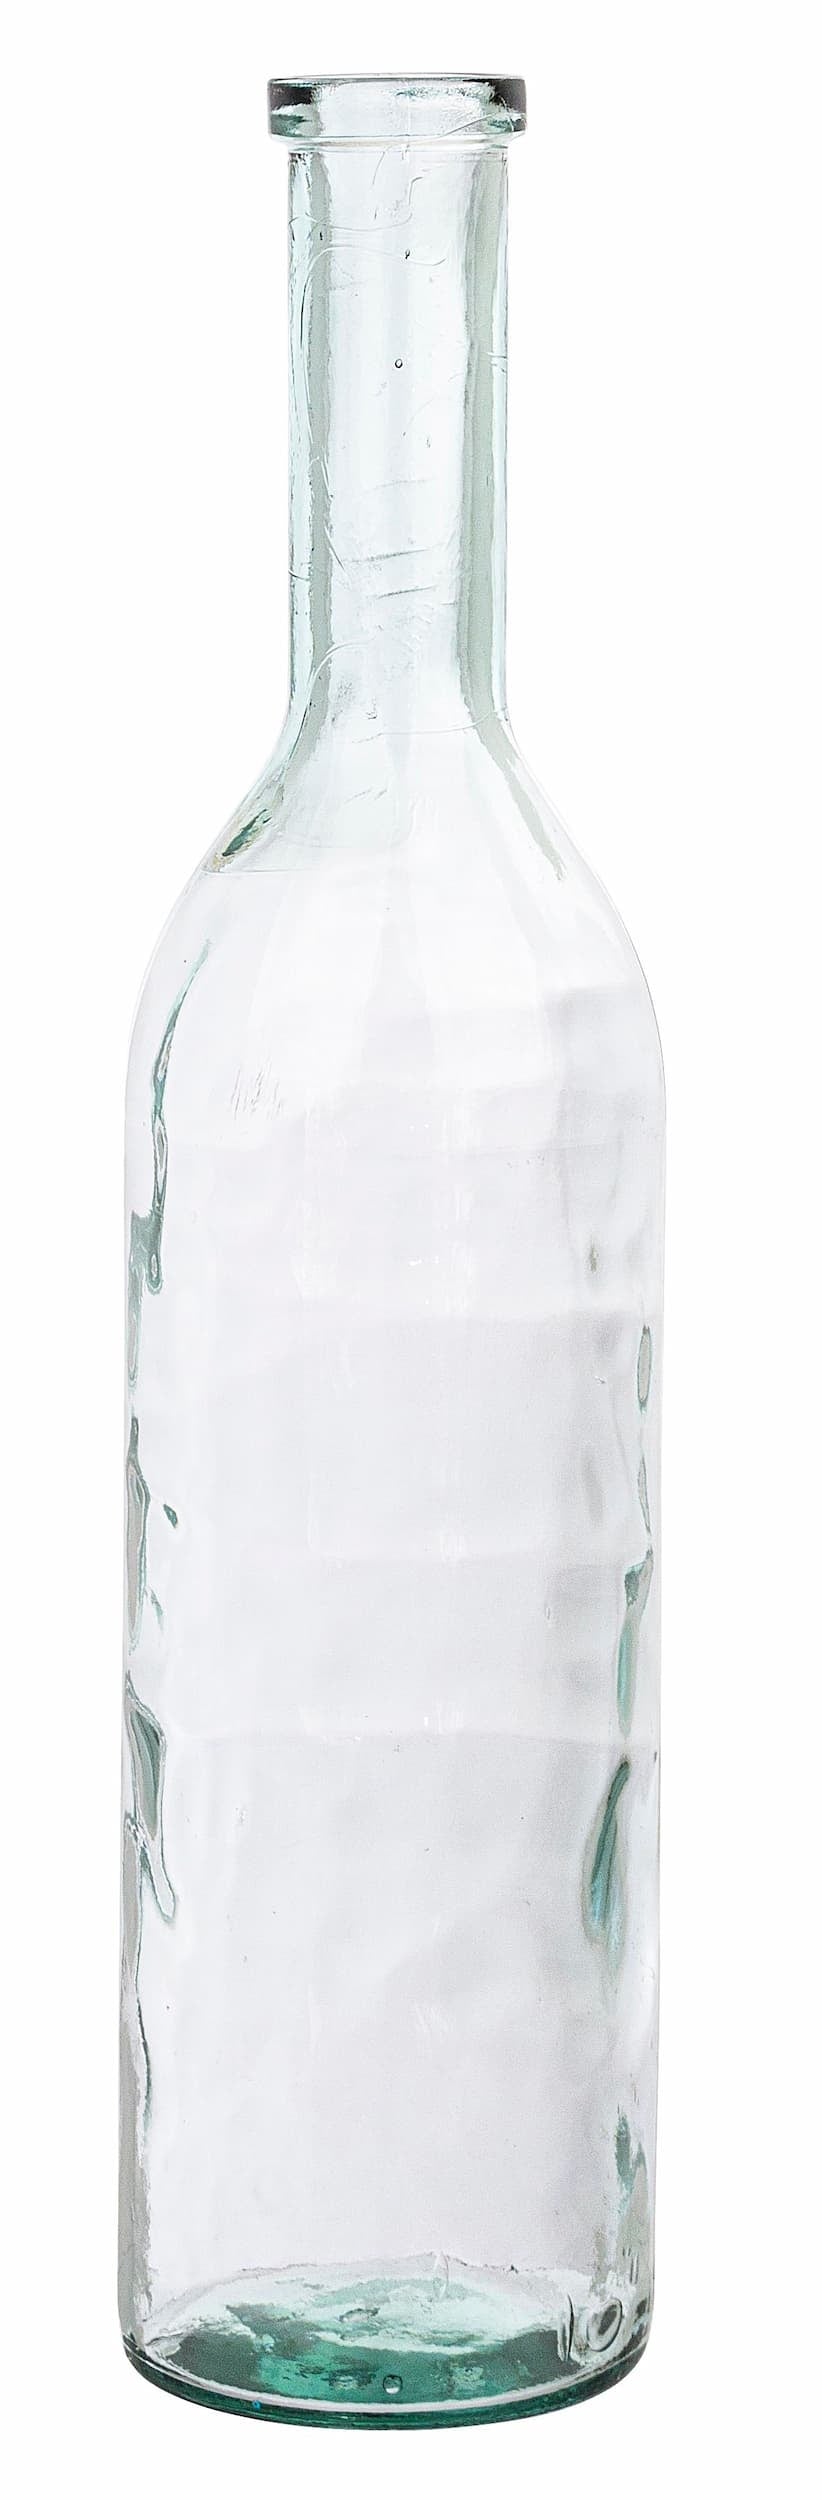 Vaza decorativa din sticla reciclata, Celebrate Bottle M Transparent, Ø19xH77,5 cm